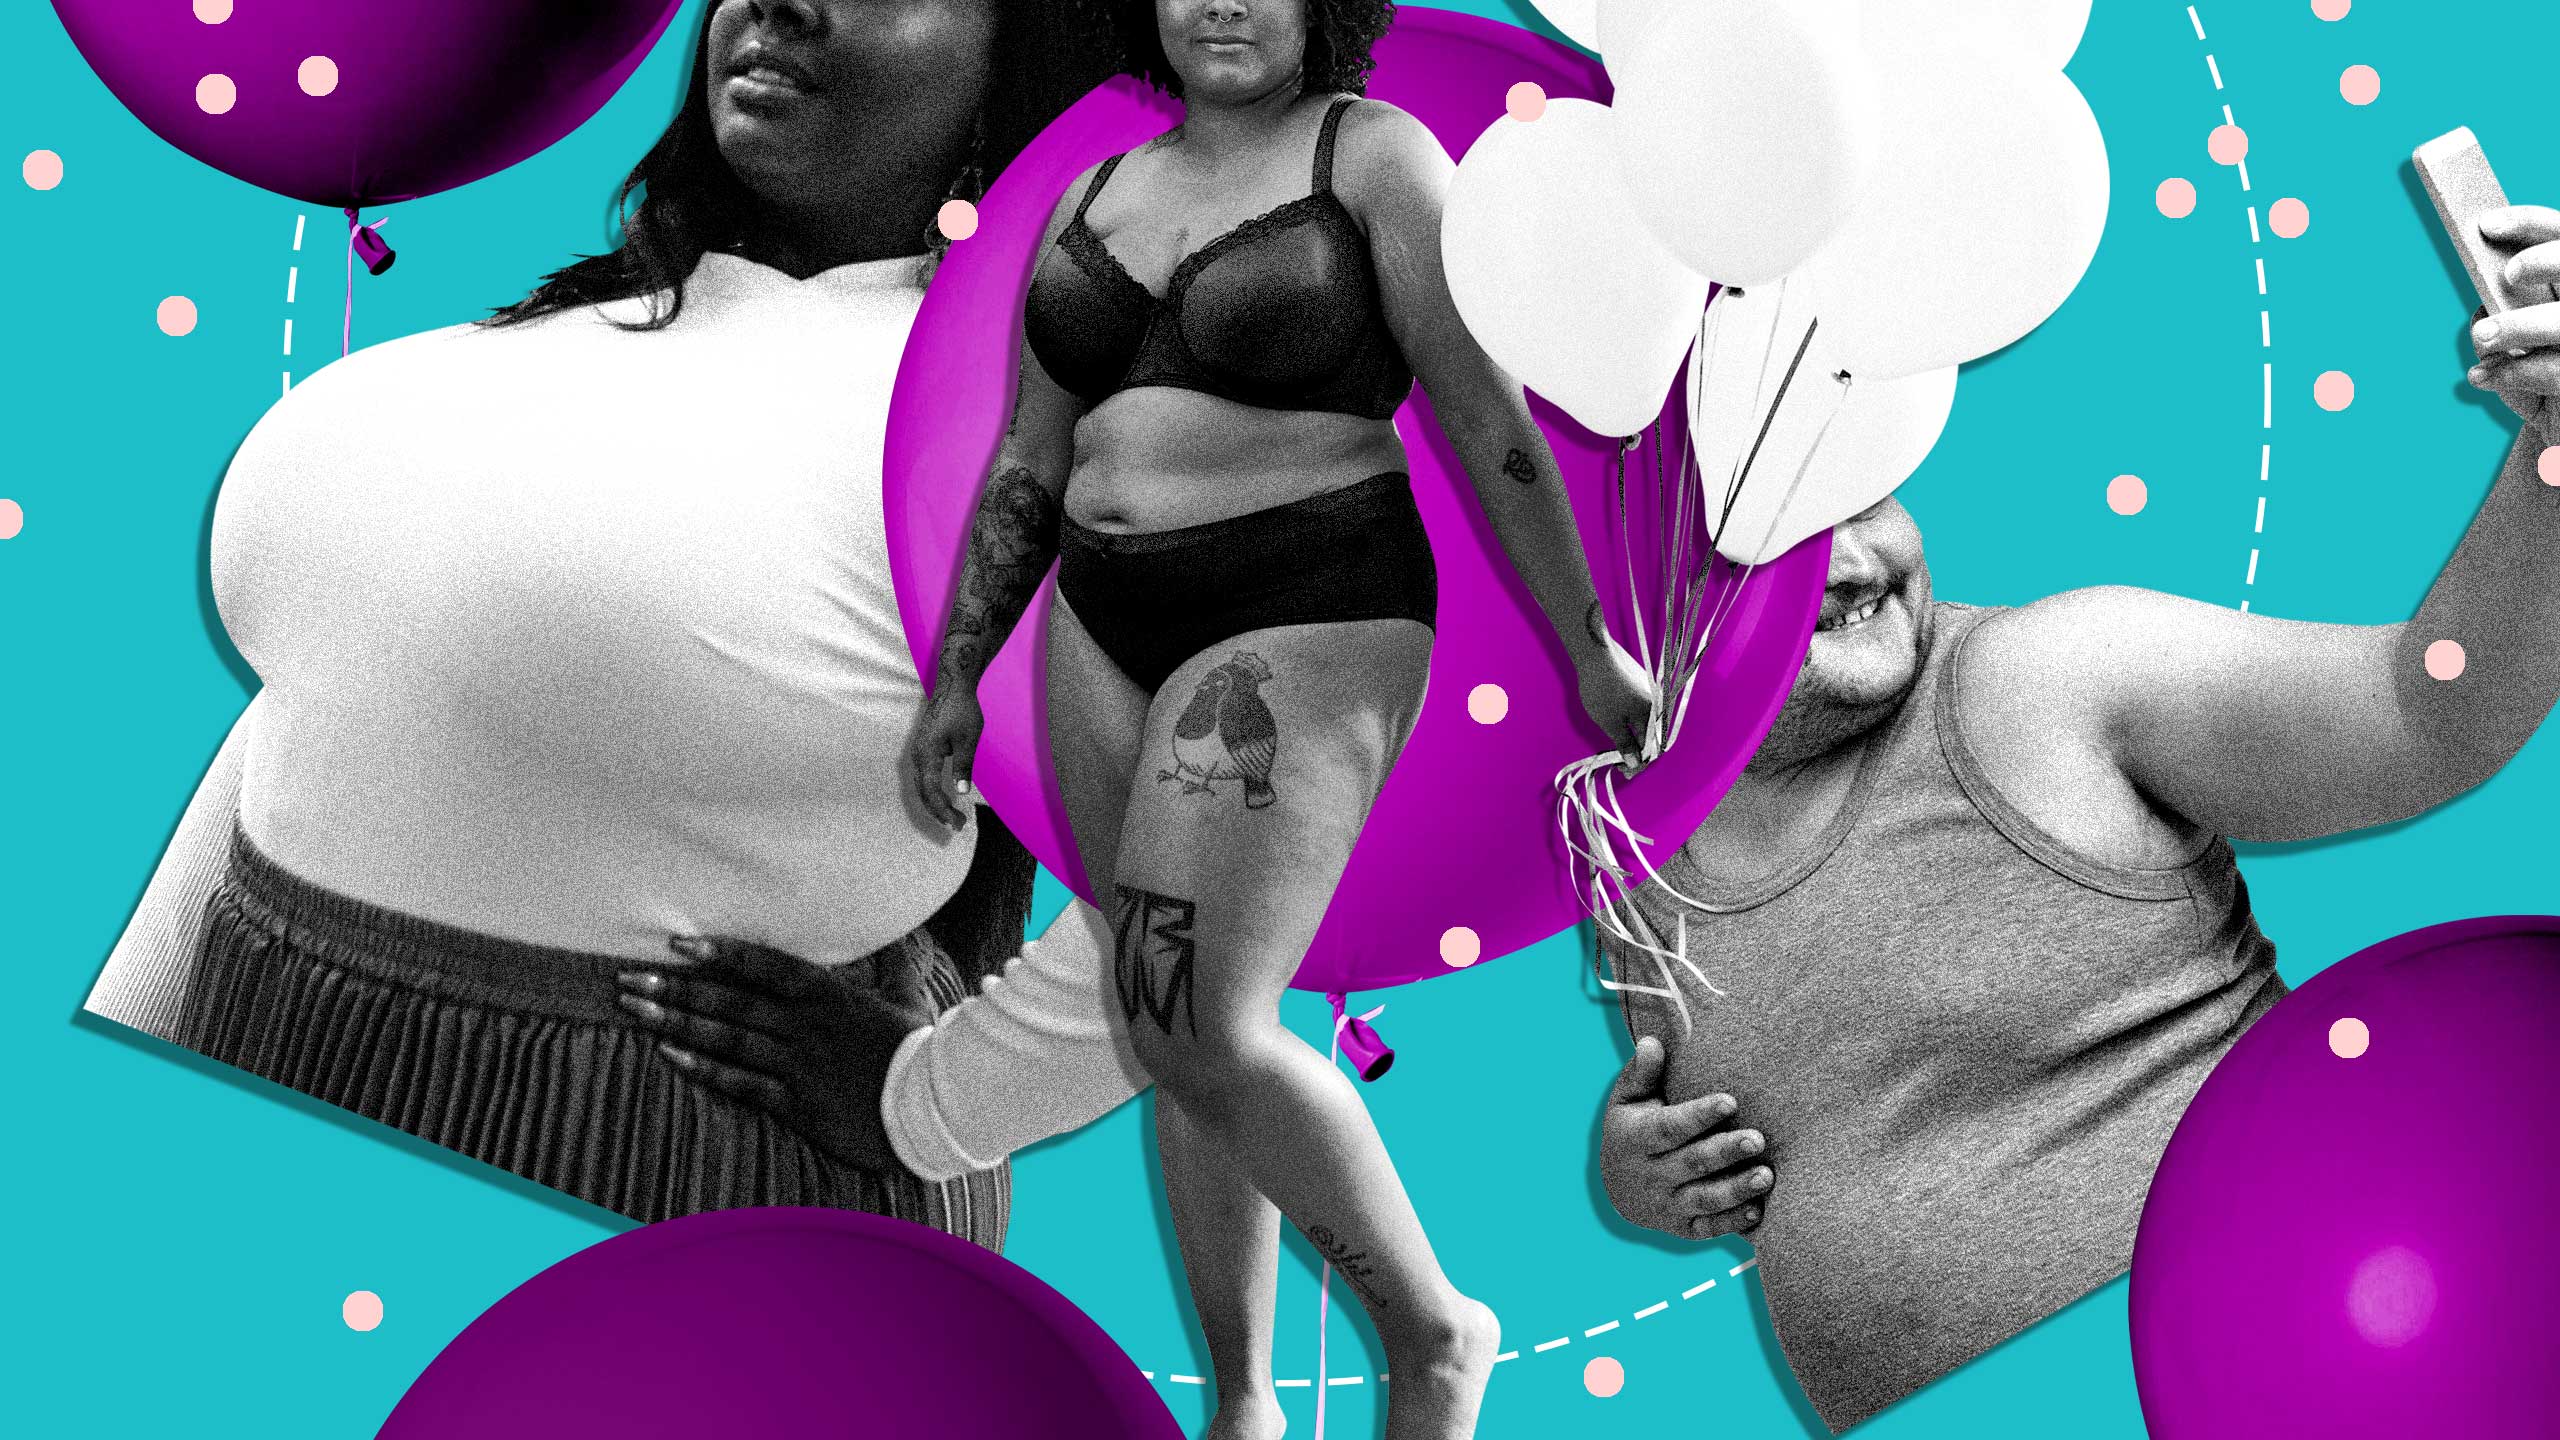 We must celebrate fat LGBTQ2S+ bodies